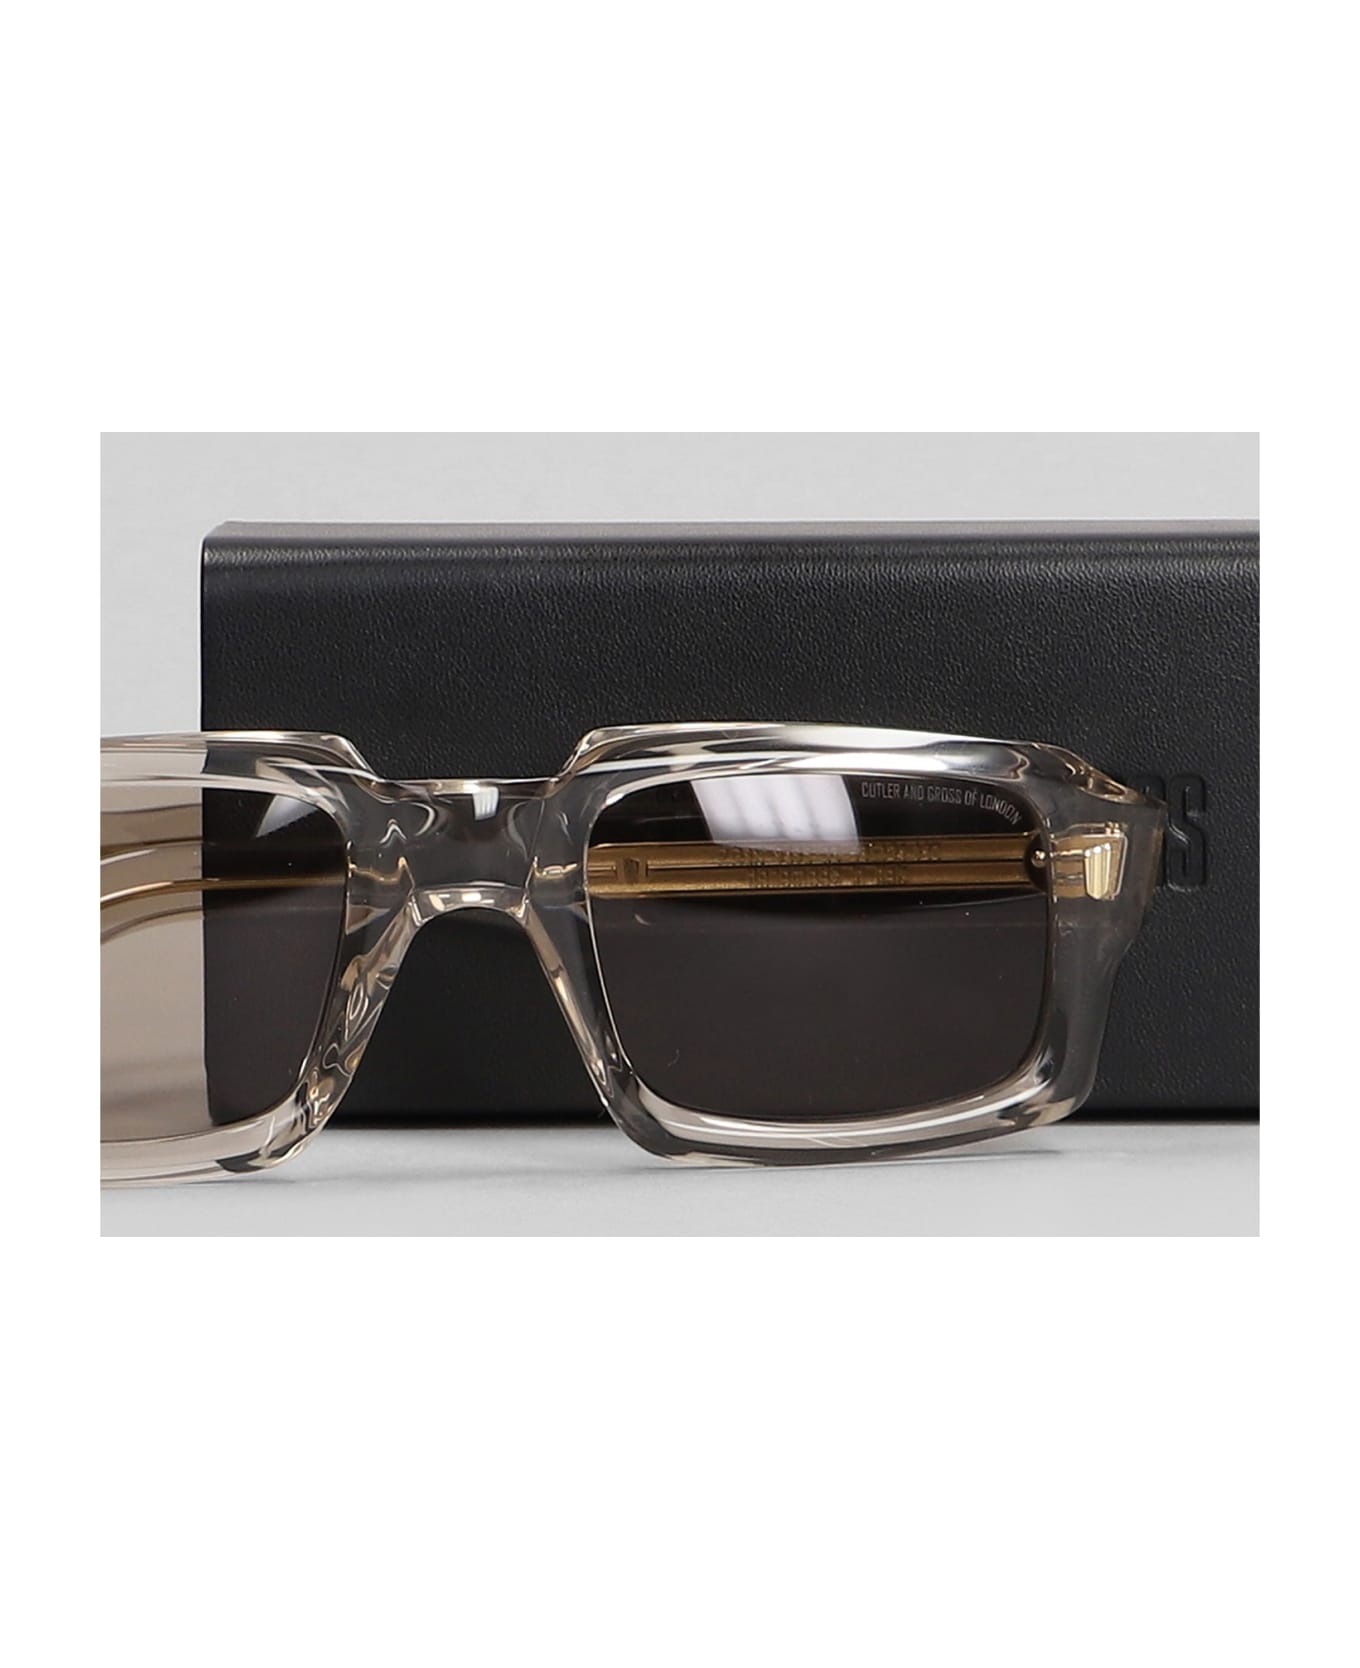 Cutler and Gross 9495 Sunglasses In Transparent Acetate - transparent